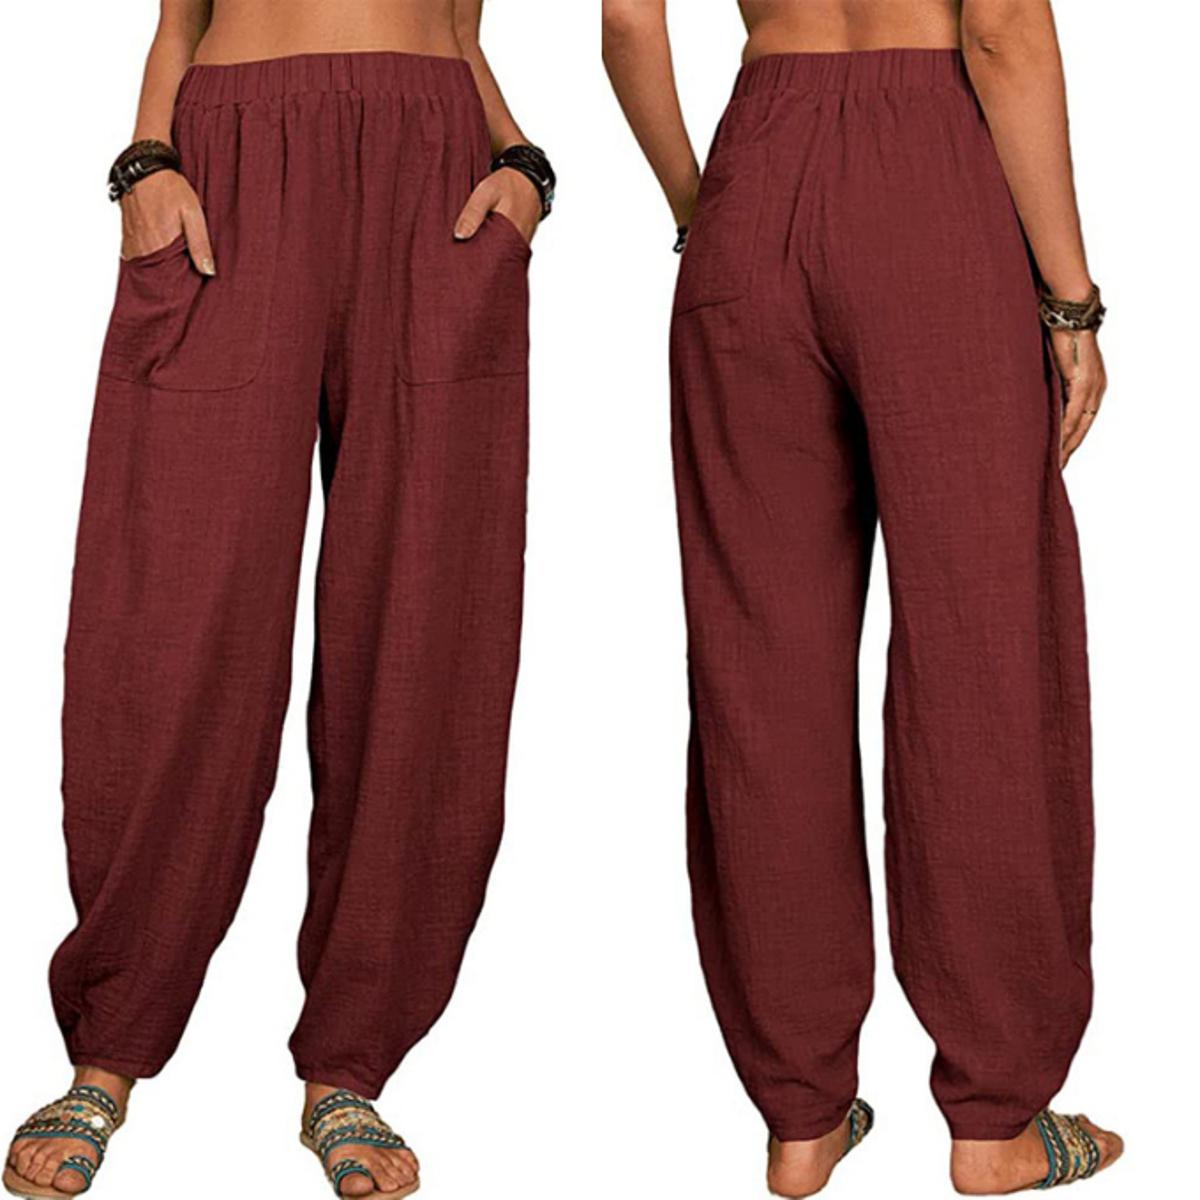 Women Cotton Linen Trousers Casual Pants Summer Yoga Home Street